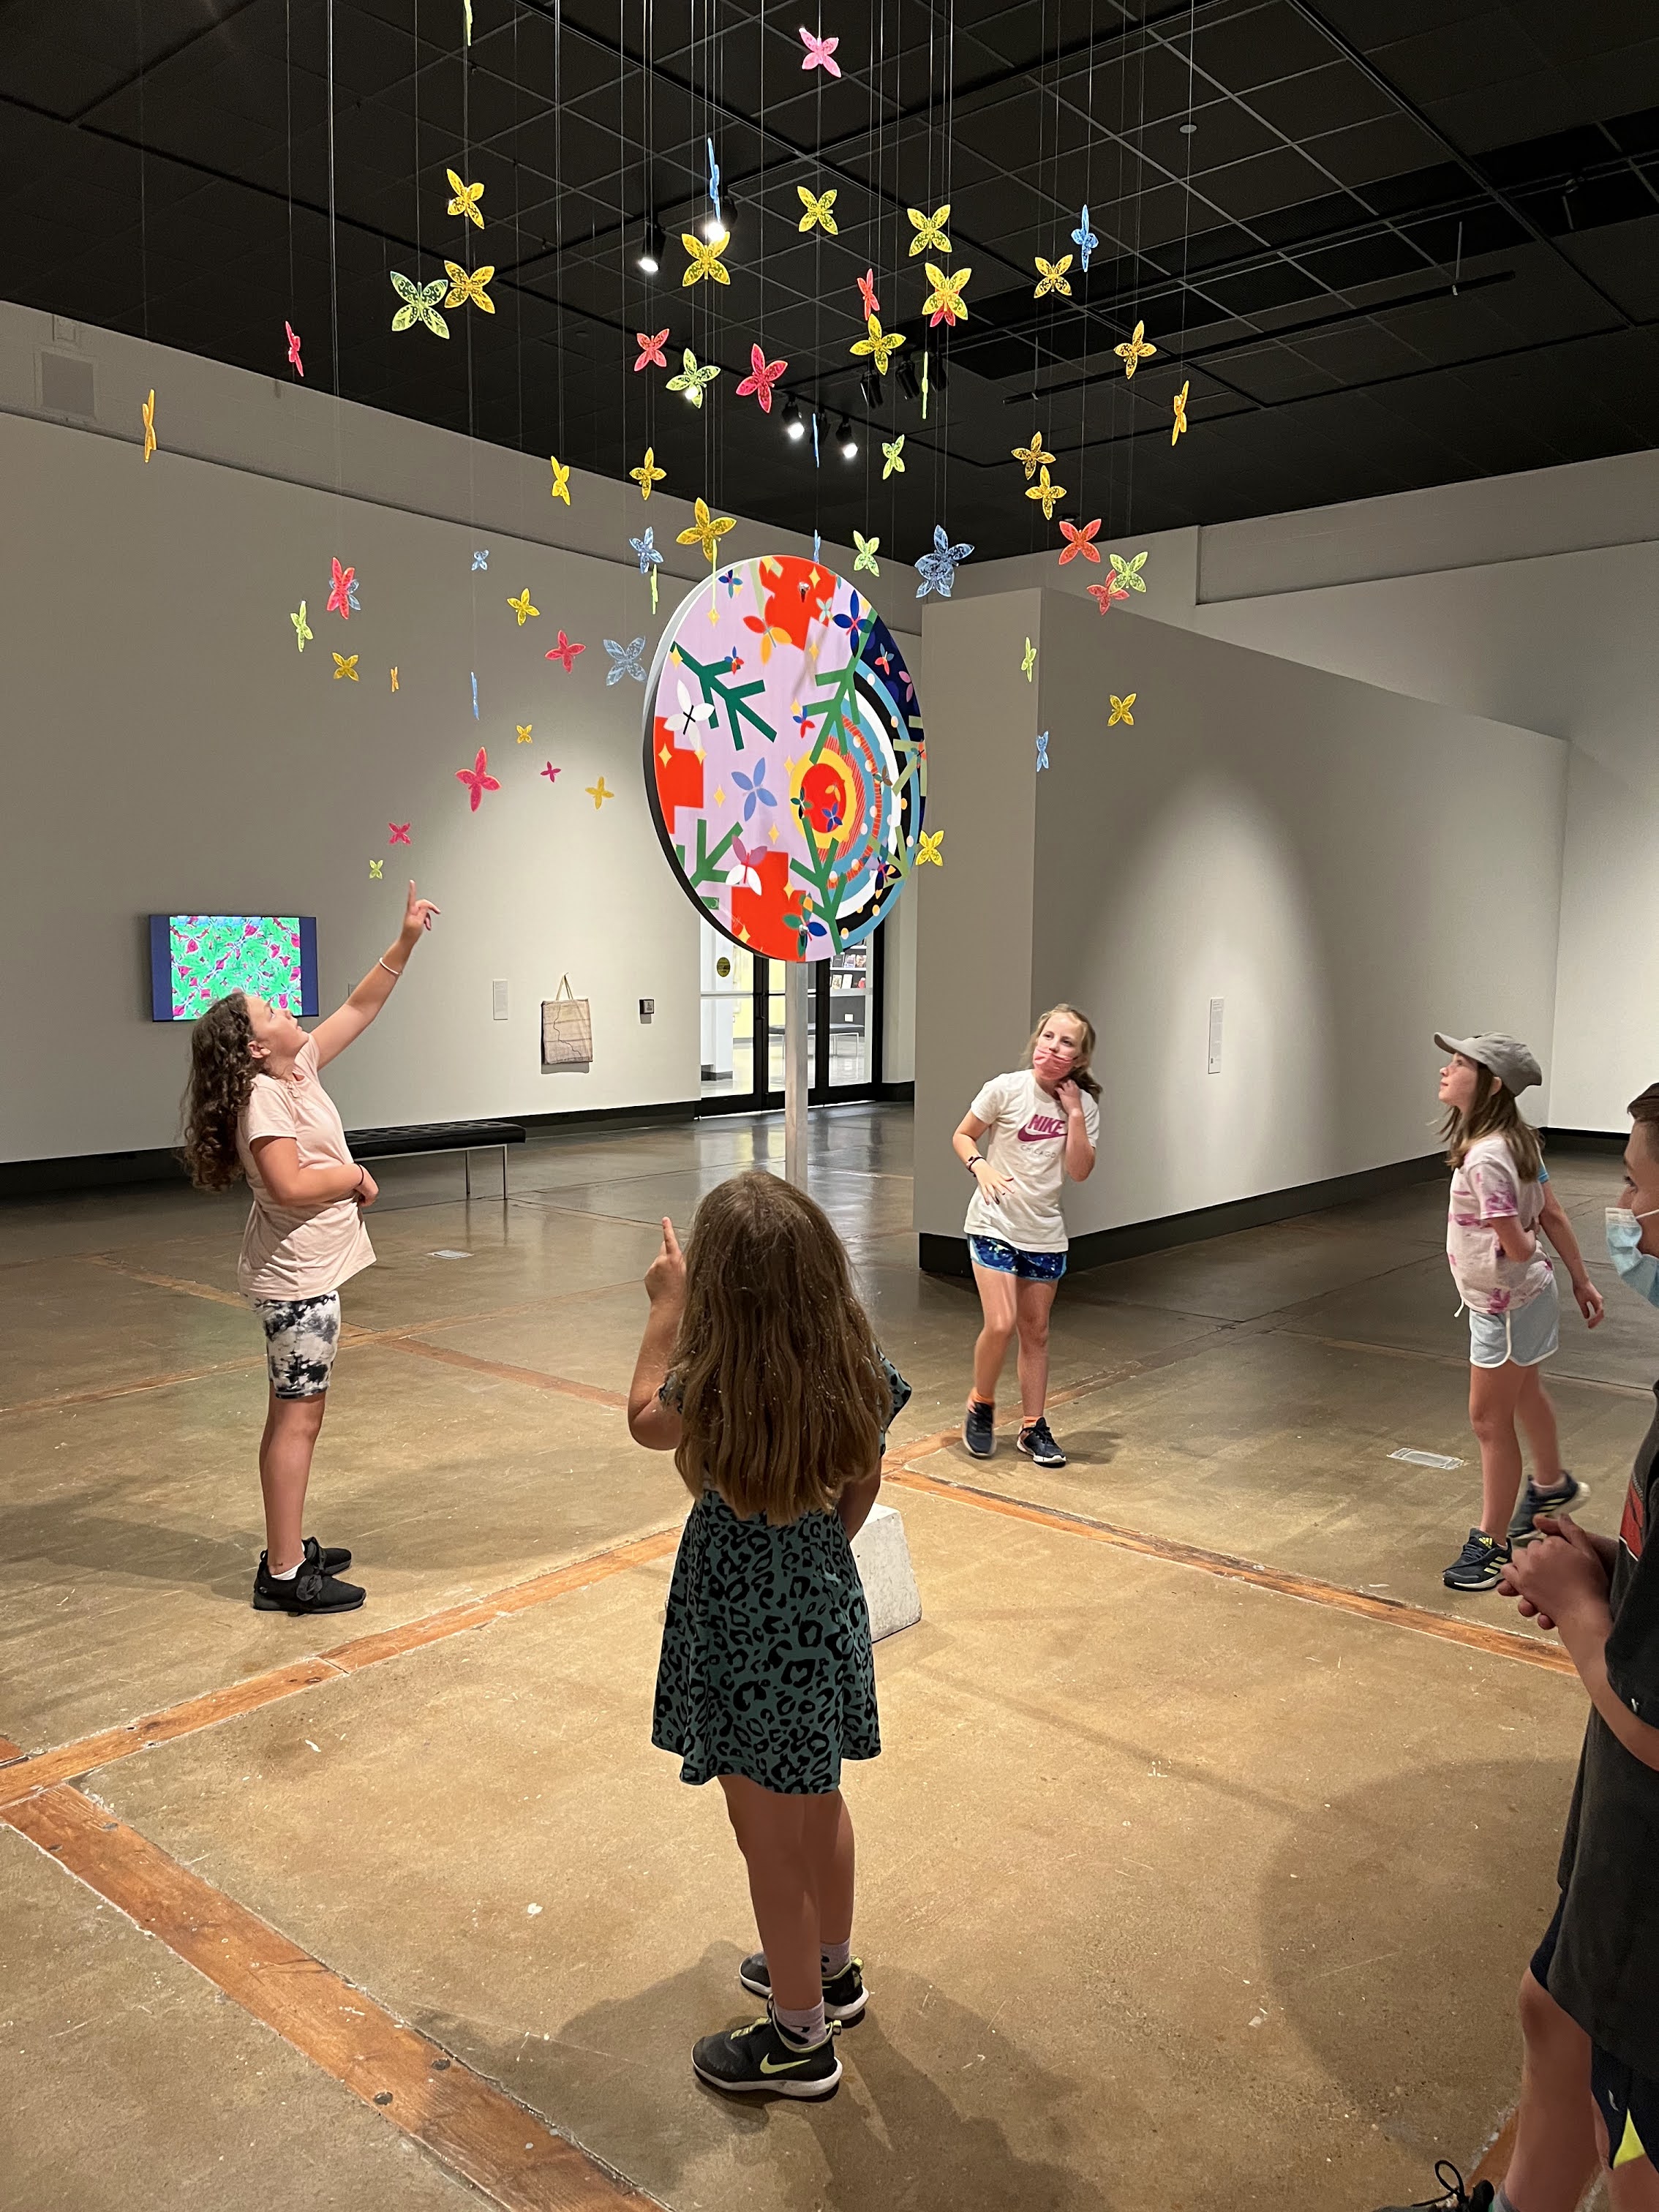 Four children stand in a circle around Jordan Bennett's artwork, one reaching up towards its suspended plexiglass butterflies